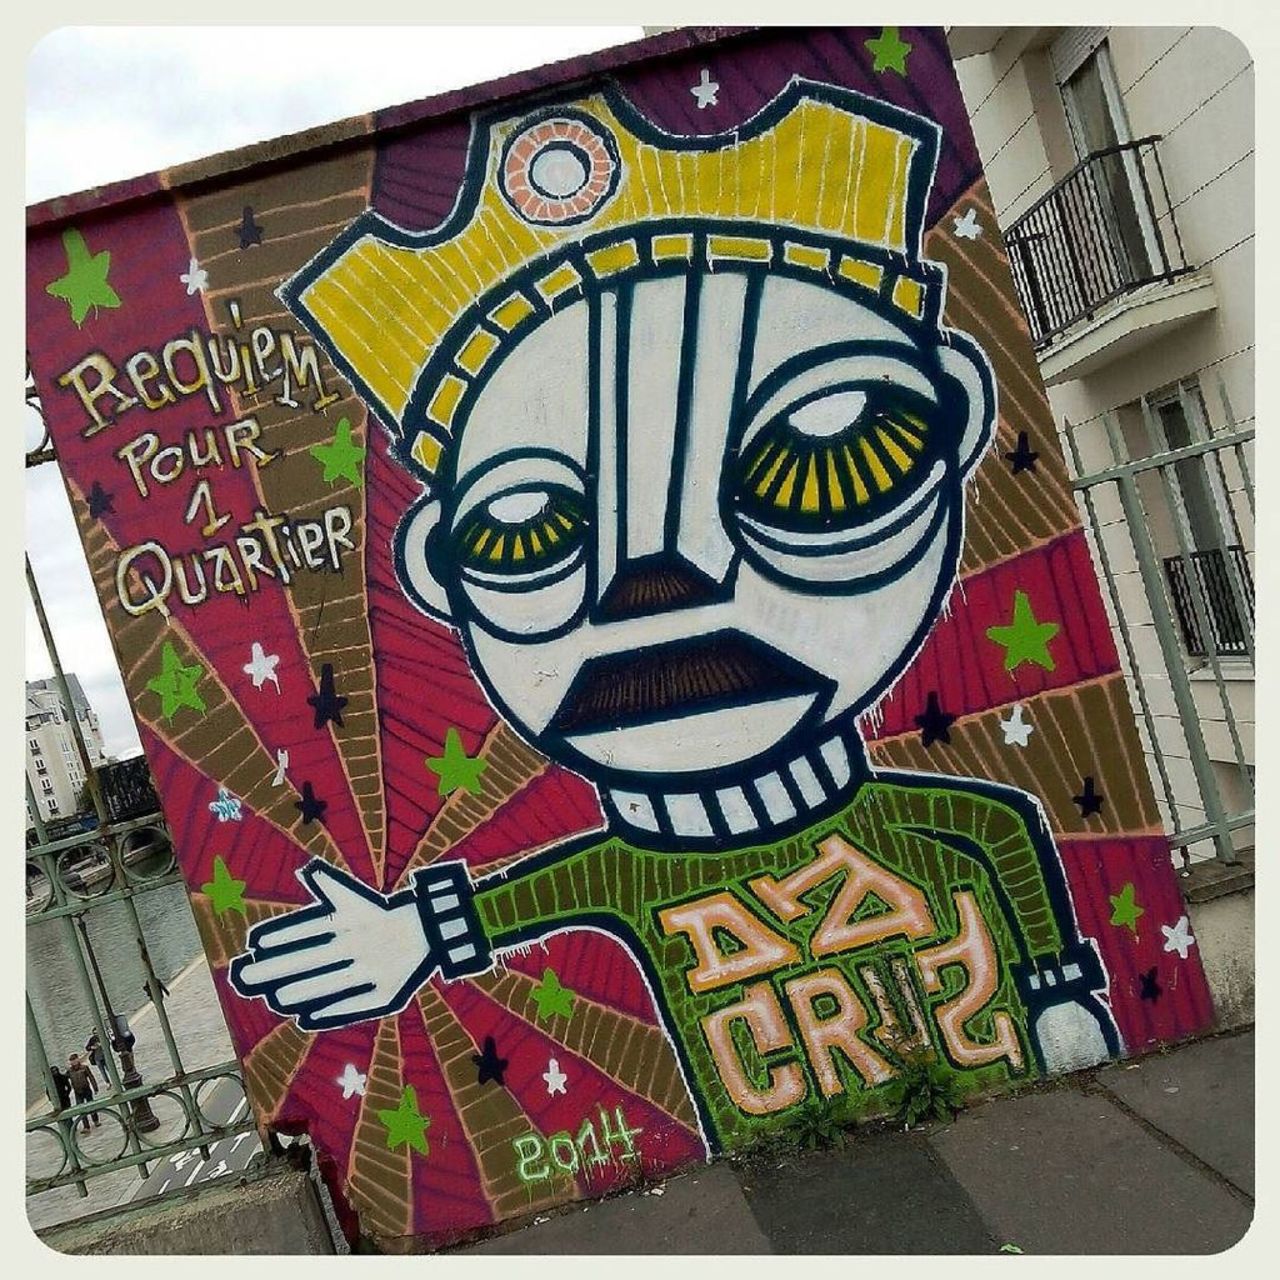 #streetart from #dacruz in #paris 
#streearteverywhere #graffiti #urbanwalls #urbanart #instagraffiti #instagraff #… https://t.co/0cYkwNaZeG